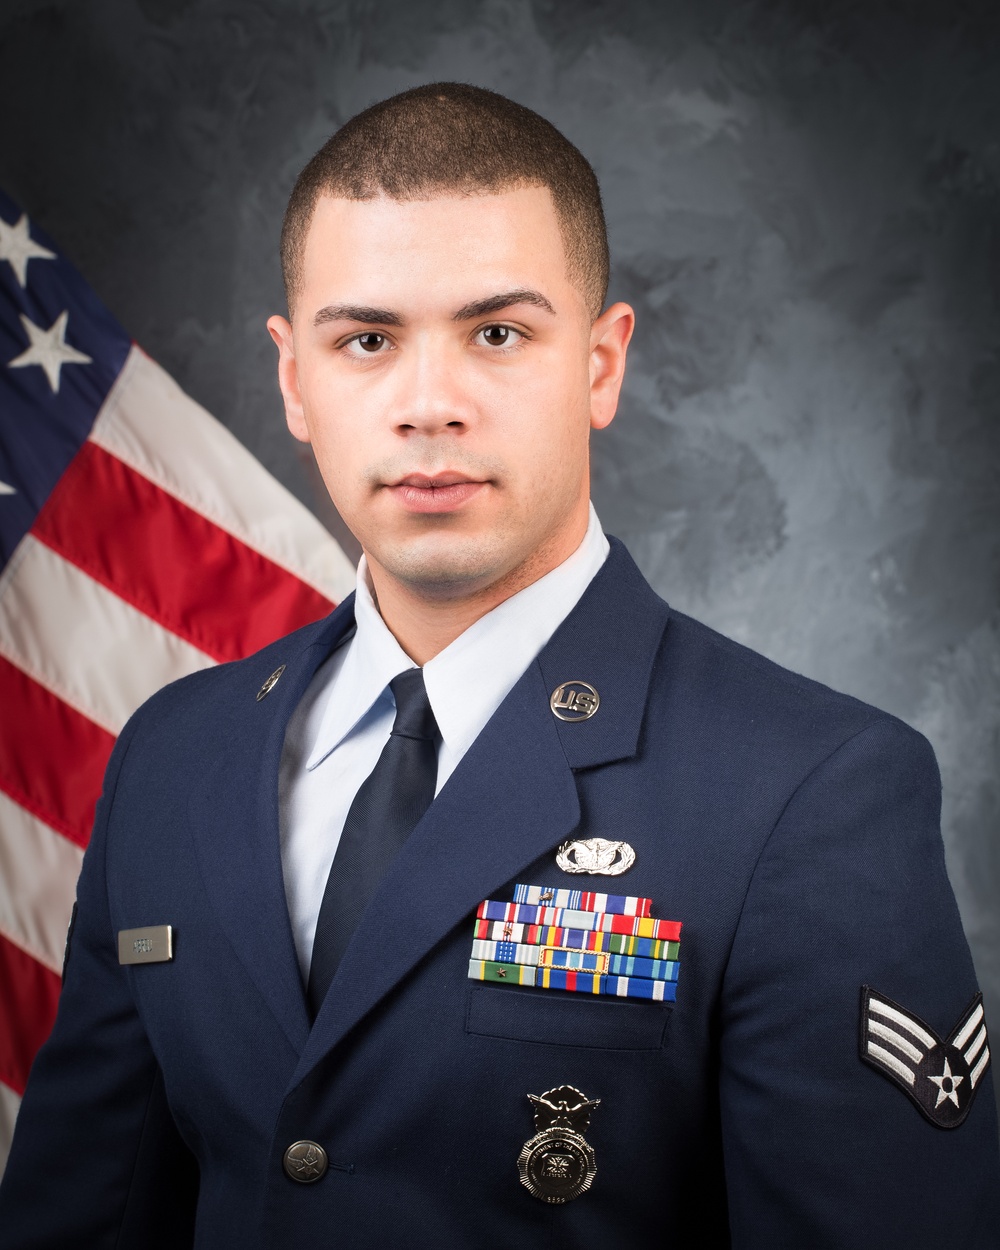 Official portrait, Senior Airman Victor J. Abreu, United States Air Force